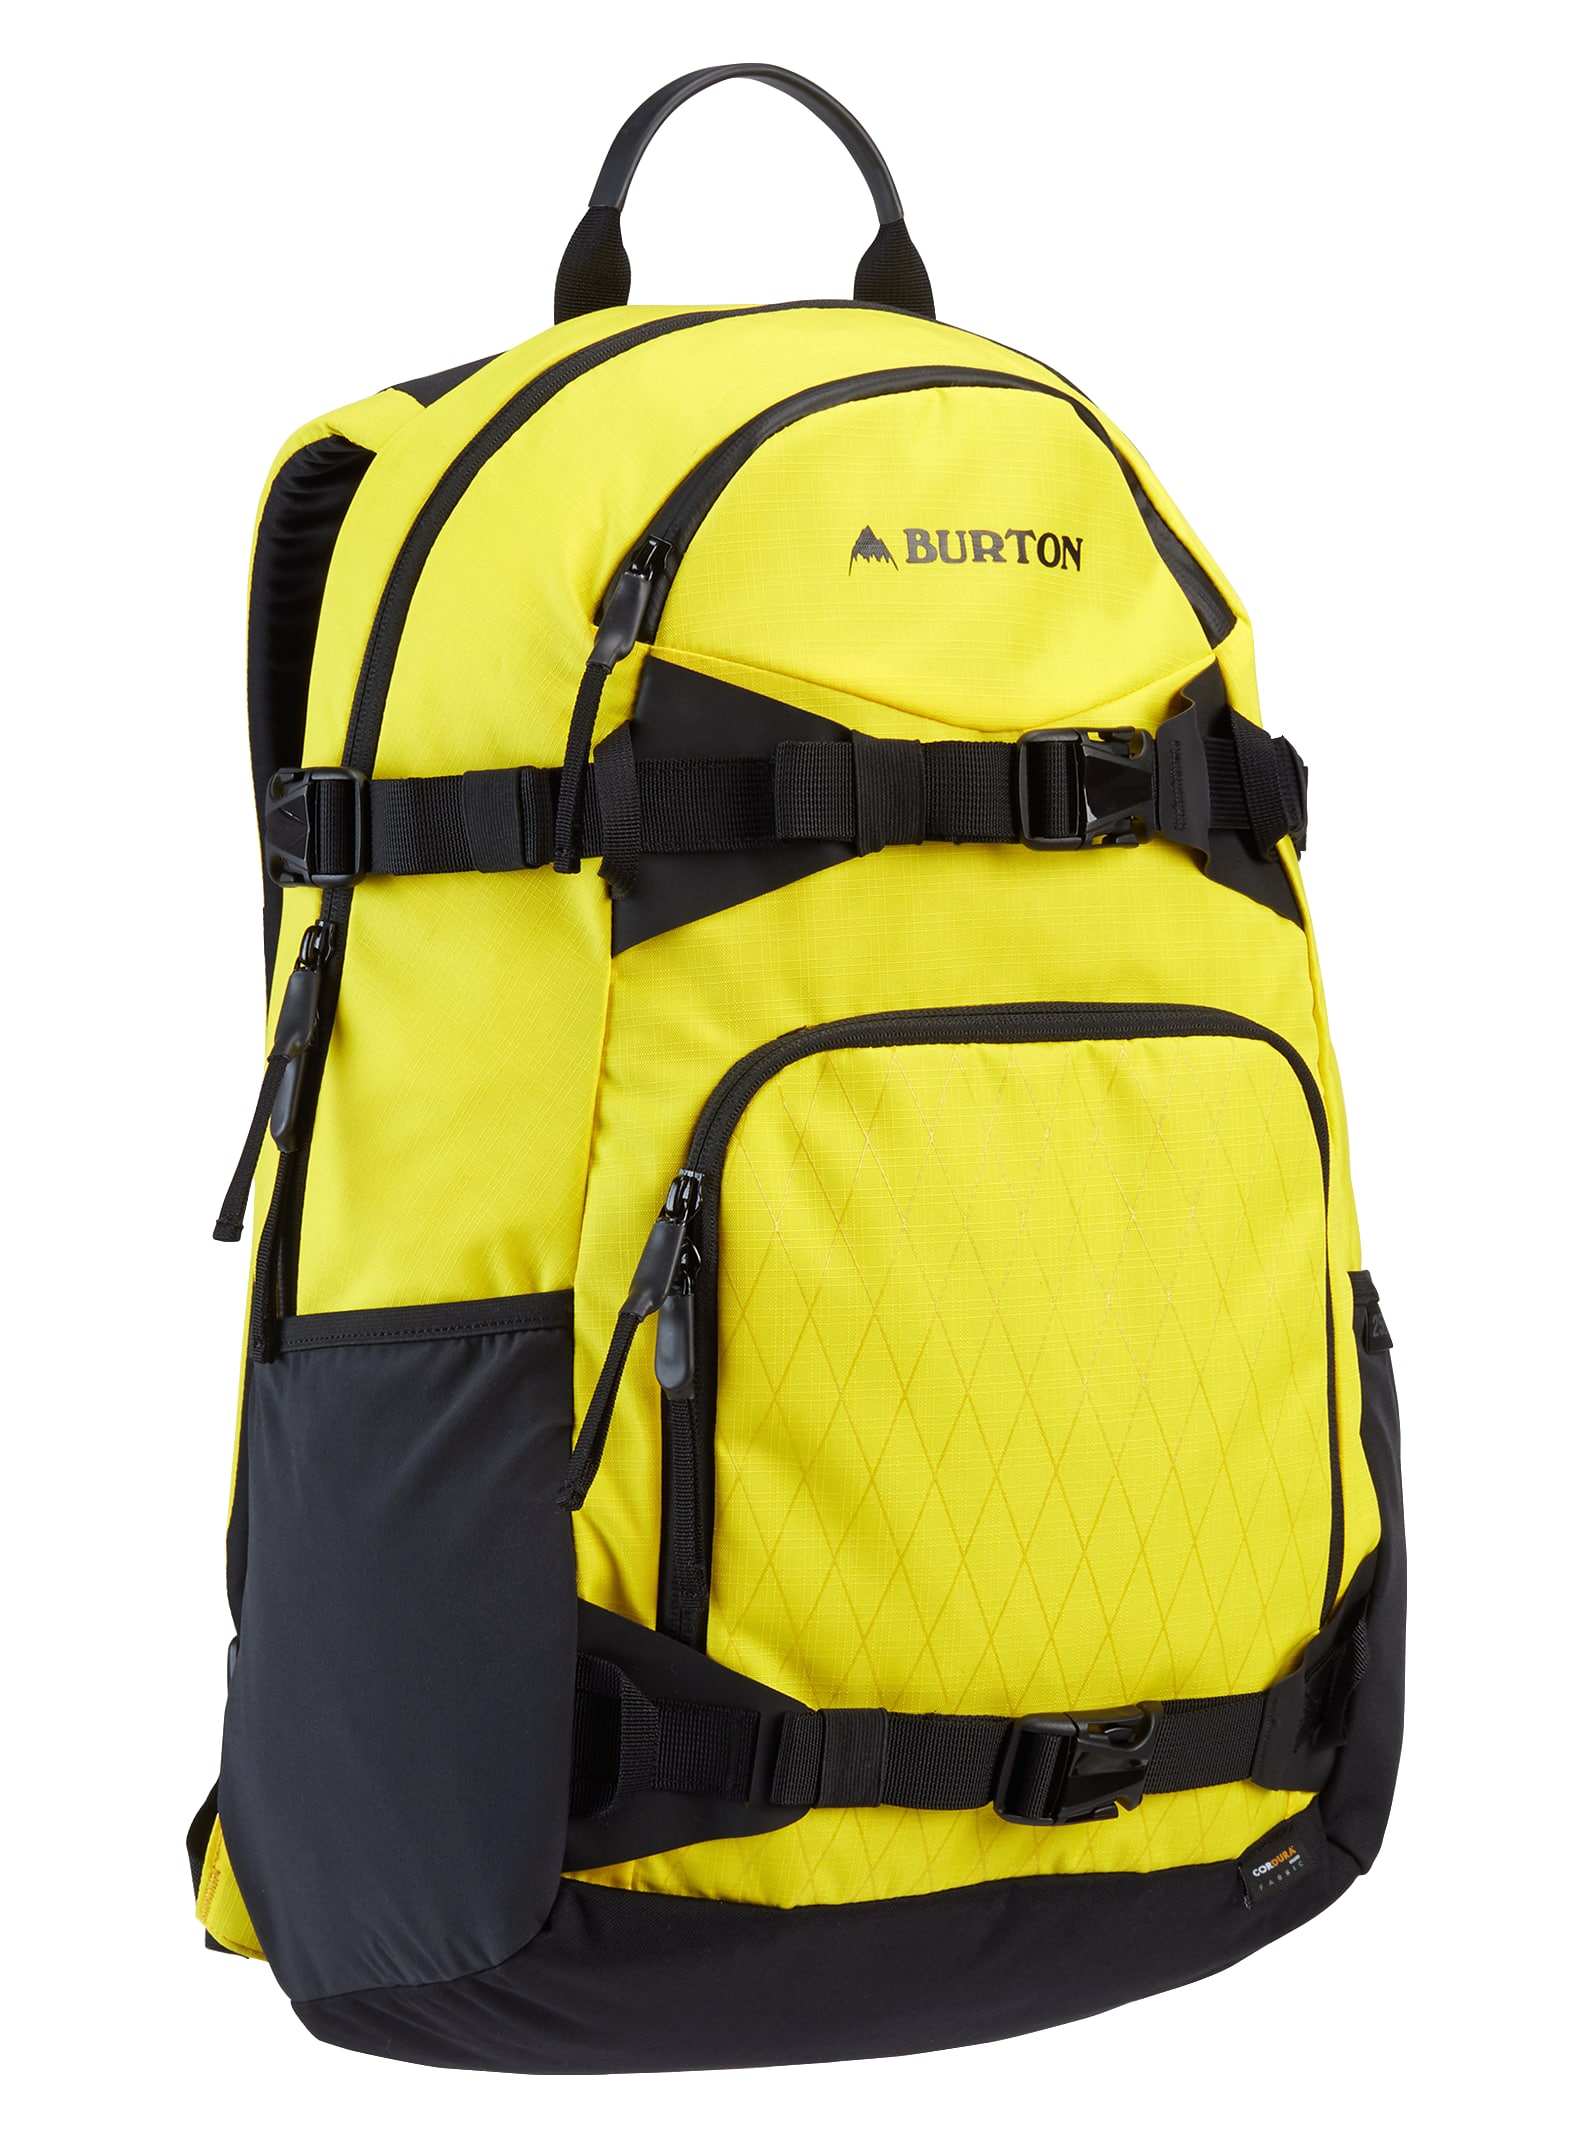 Burton Rider's 2.0 25L Backpack | Burton.com Winter 2021 US